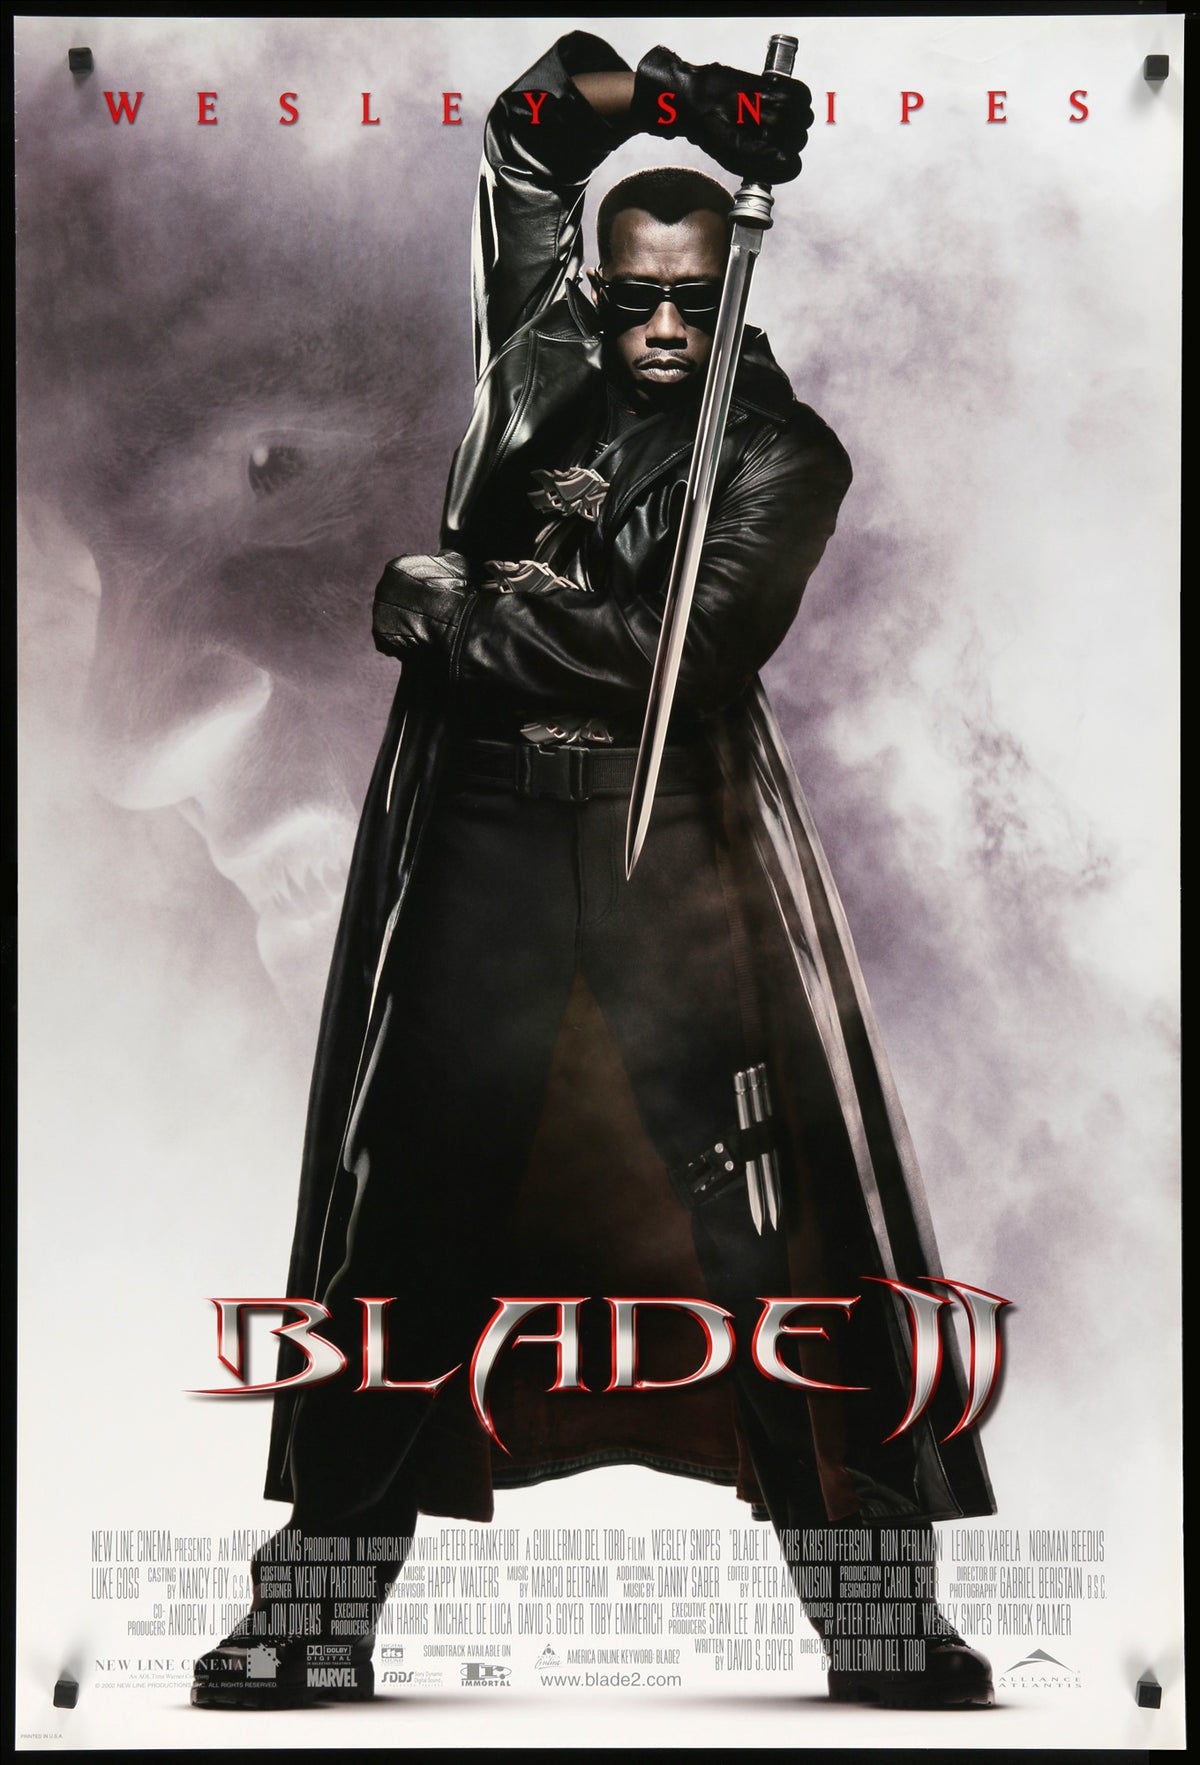 Blade II (2002) original movie poster for sale at Original Film Art